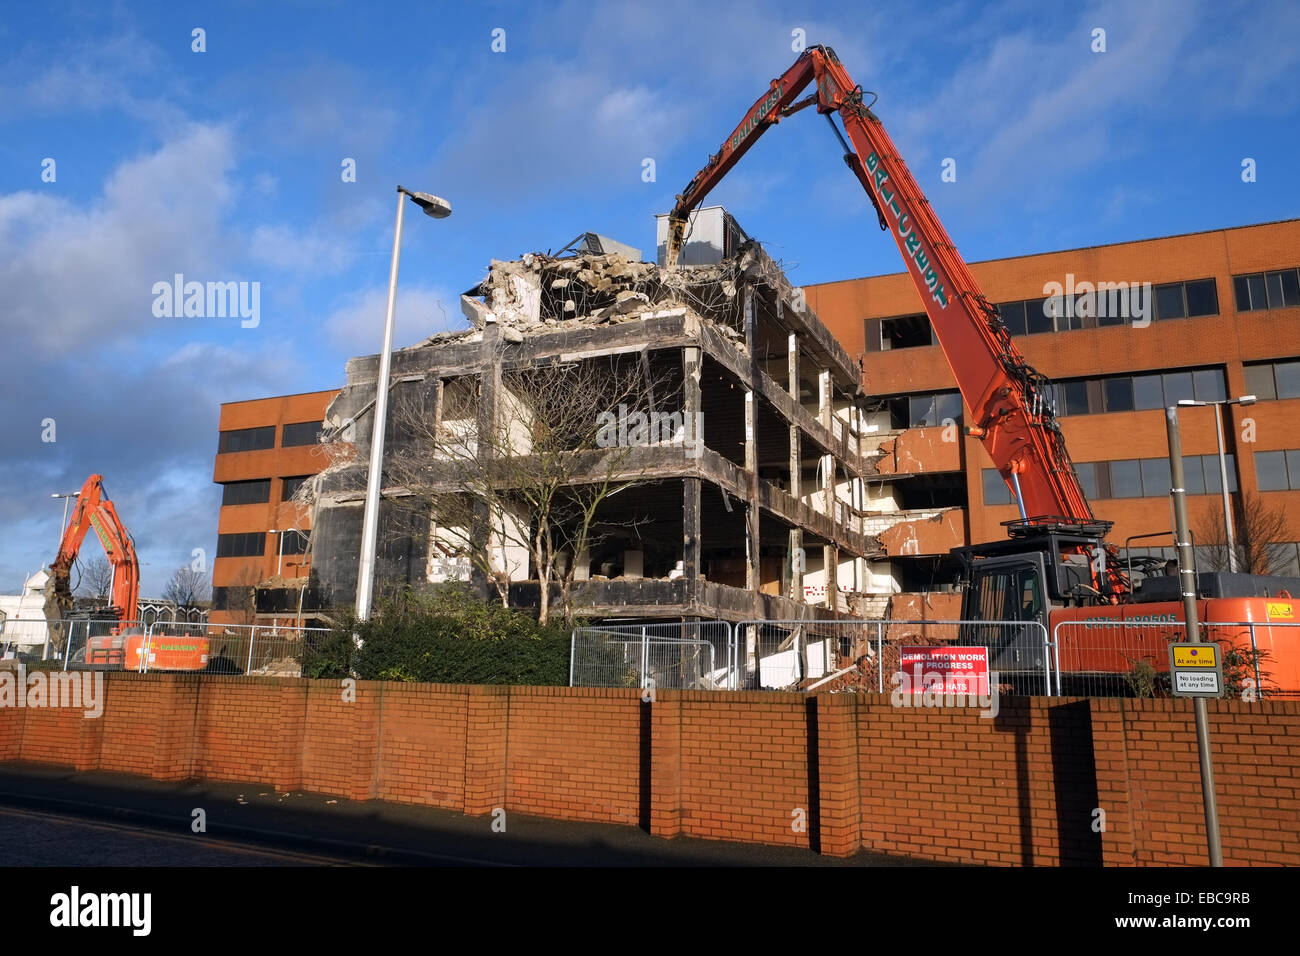 Demolition - machines tear down a building near Heathrow Airport, UK. Stock Photo